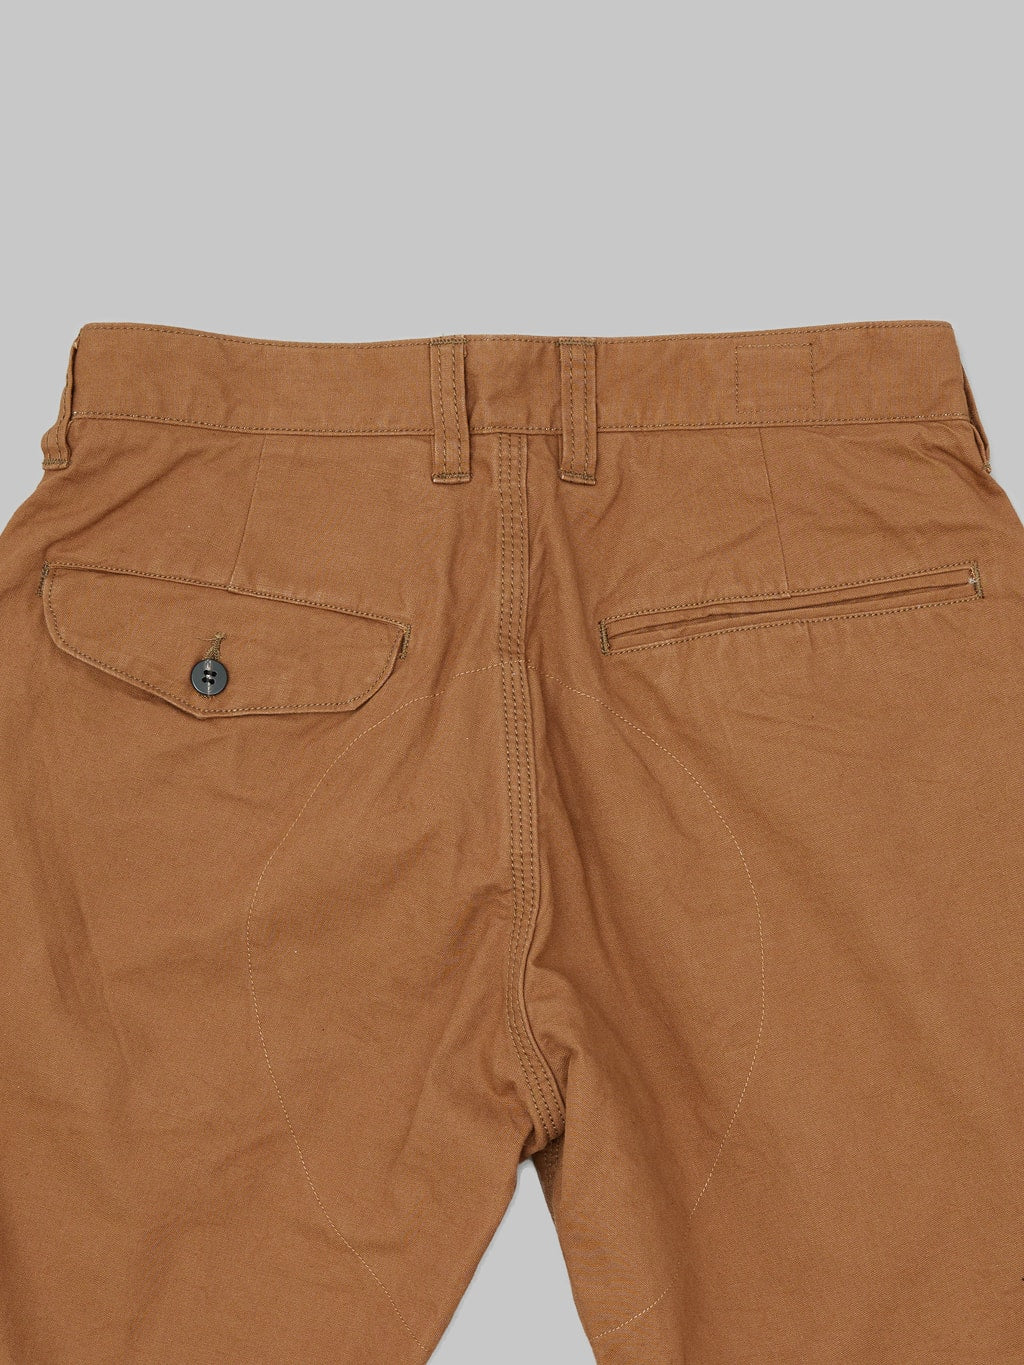 UES Duck Canvas Short Pants Brown back pockets details